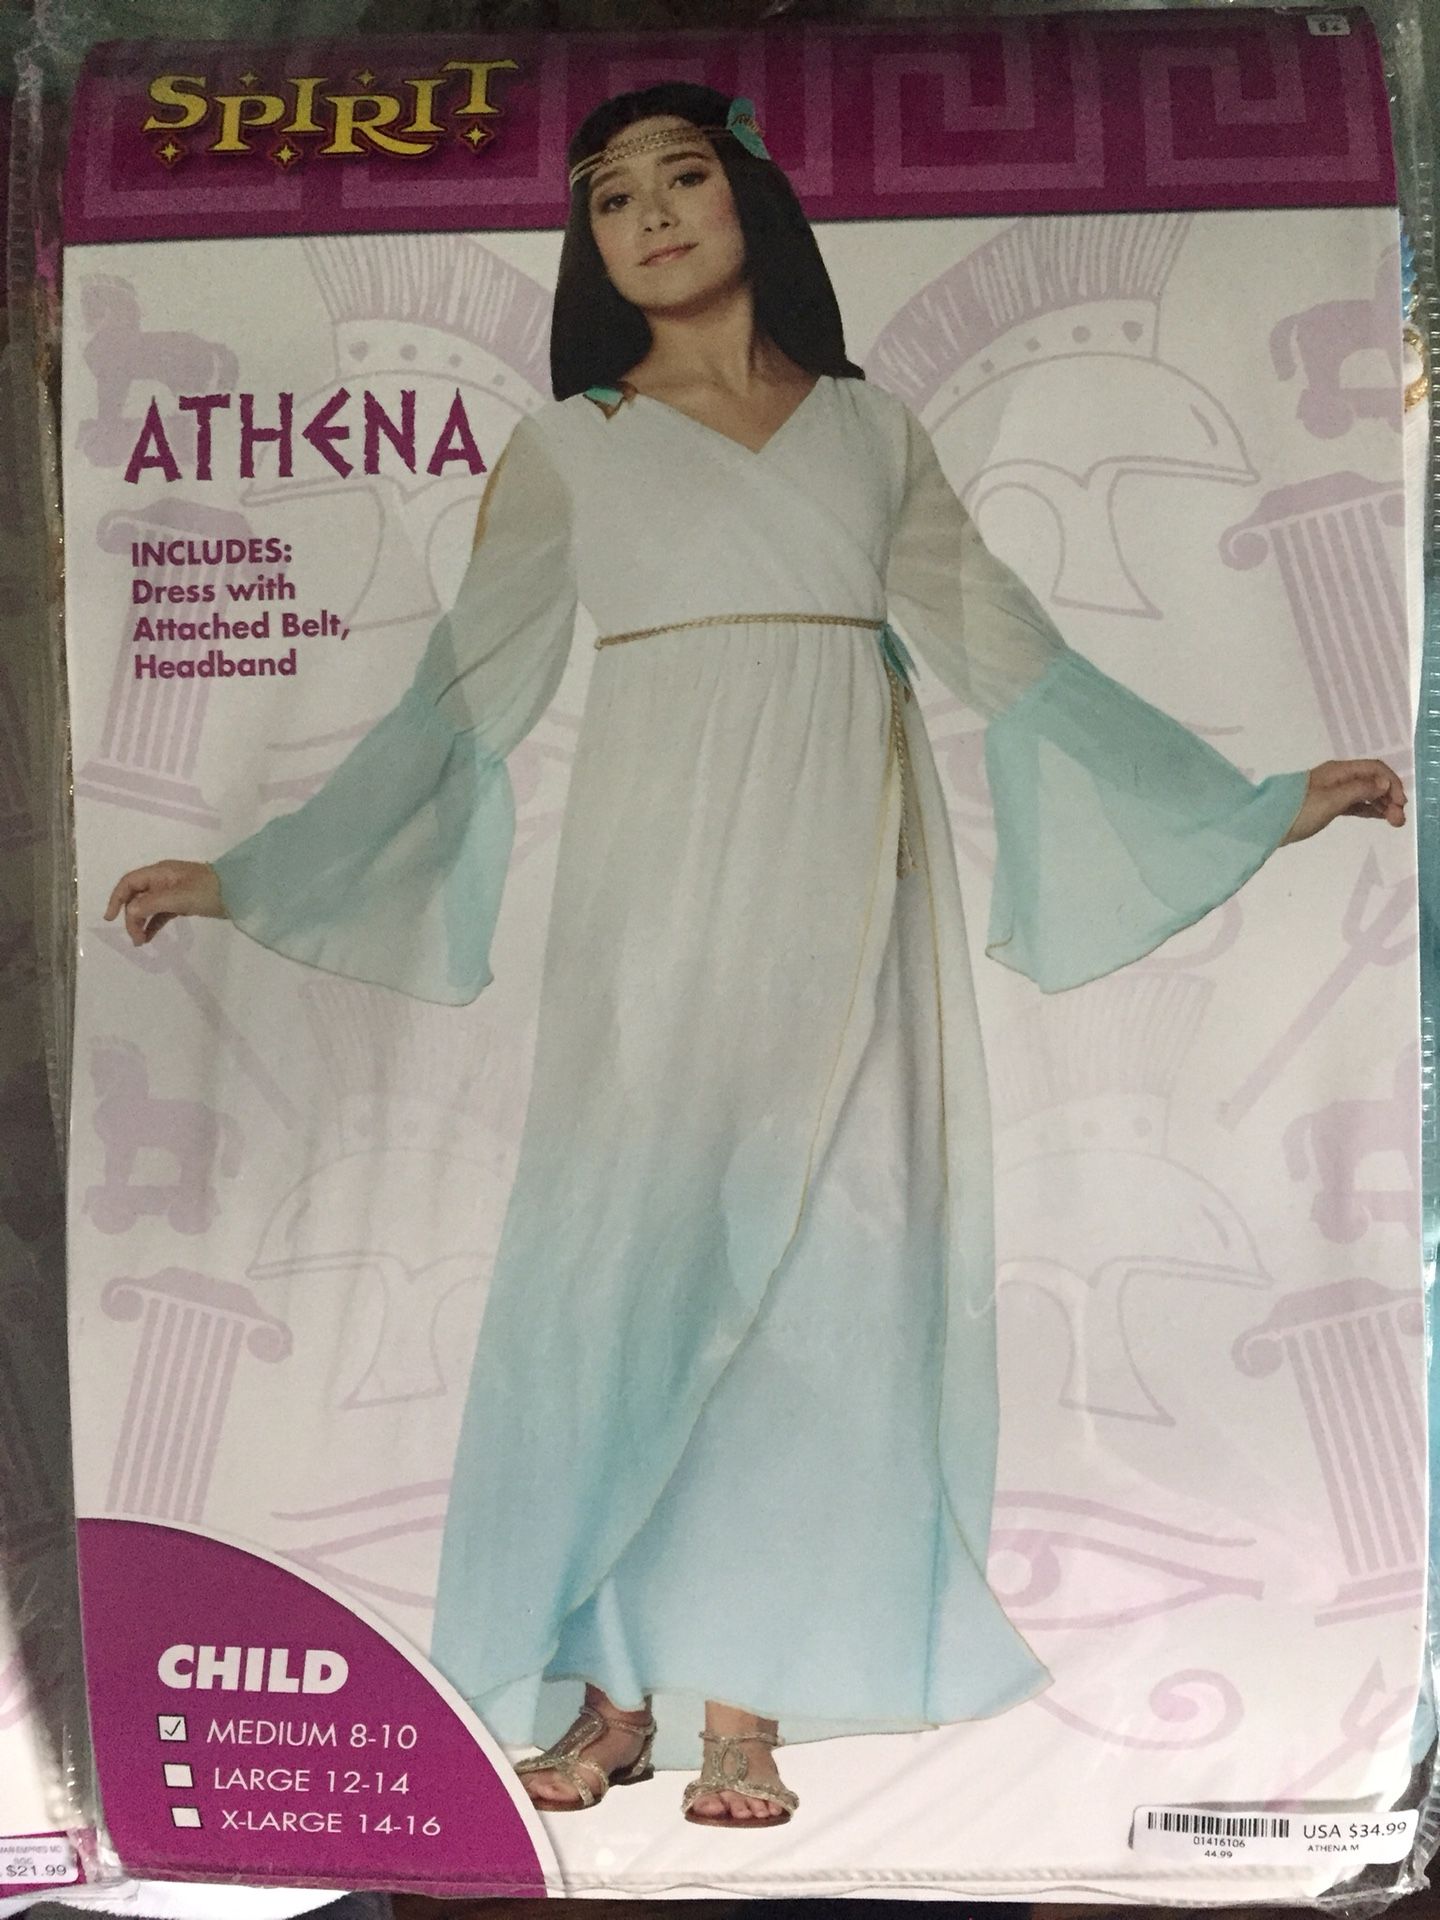 Halloween costumes -Athena and Roman Princess